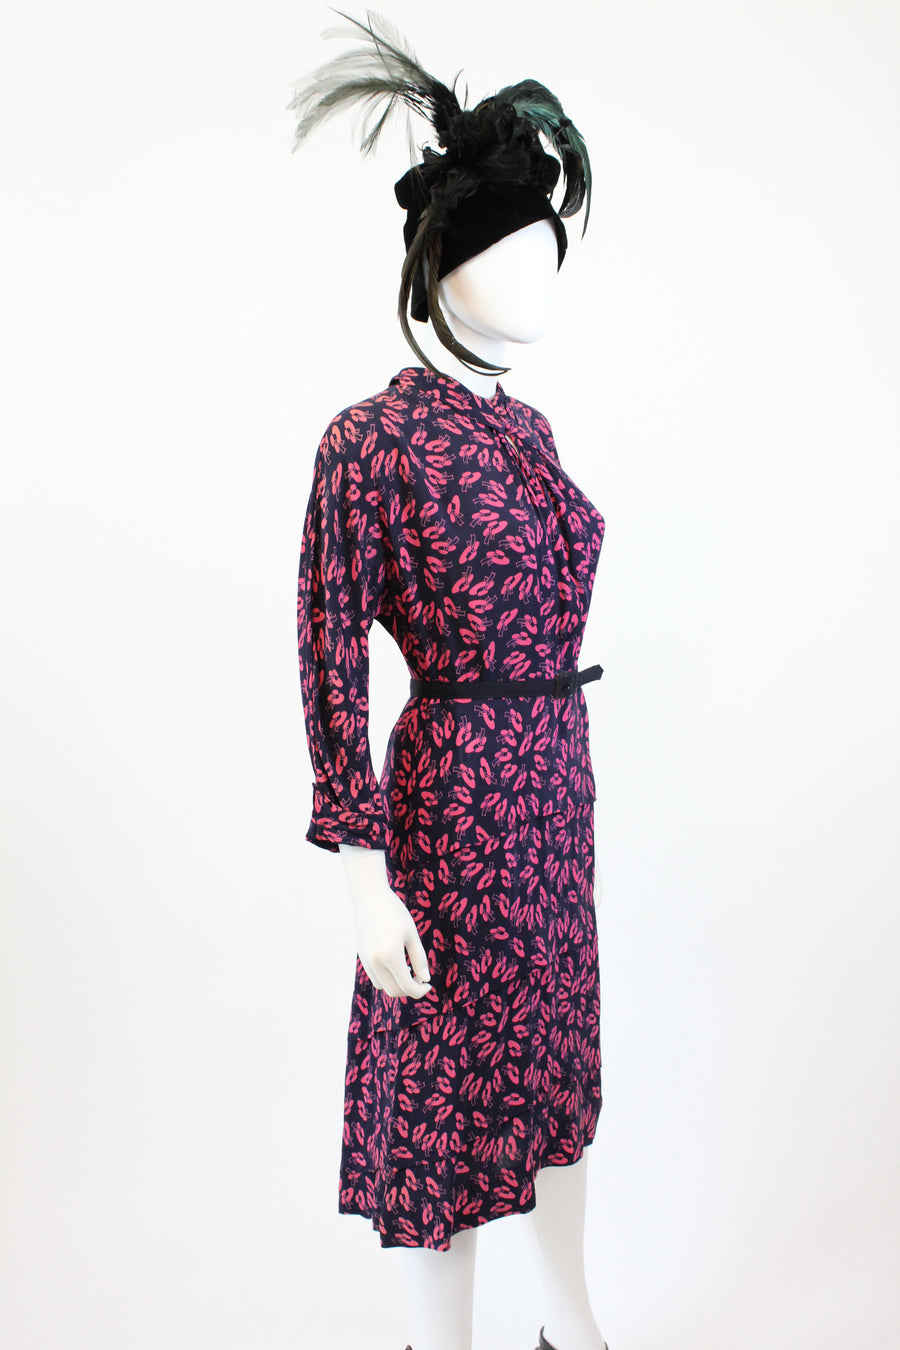 1940s sun hat print novelty dress small | new fall